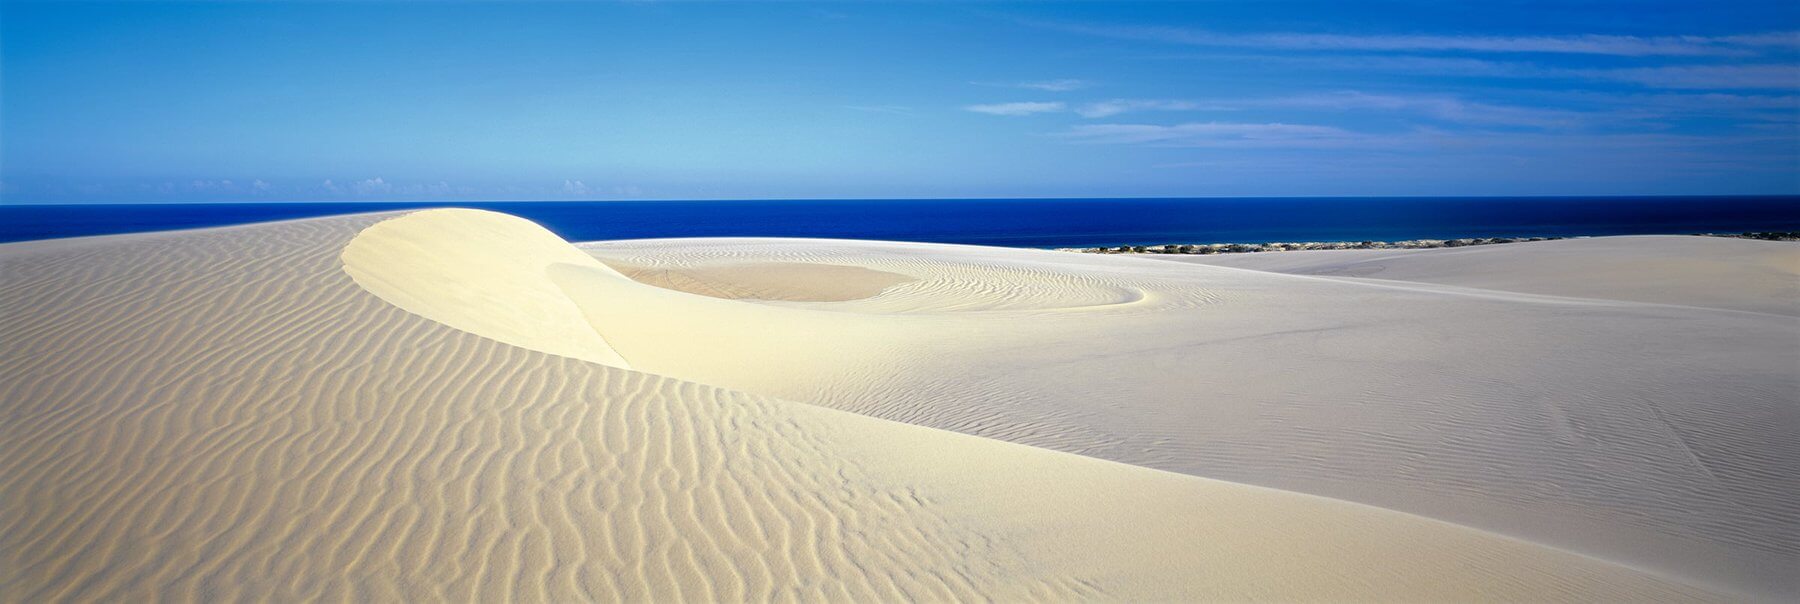 Visit the Sand Dunes